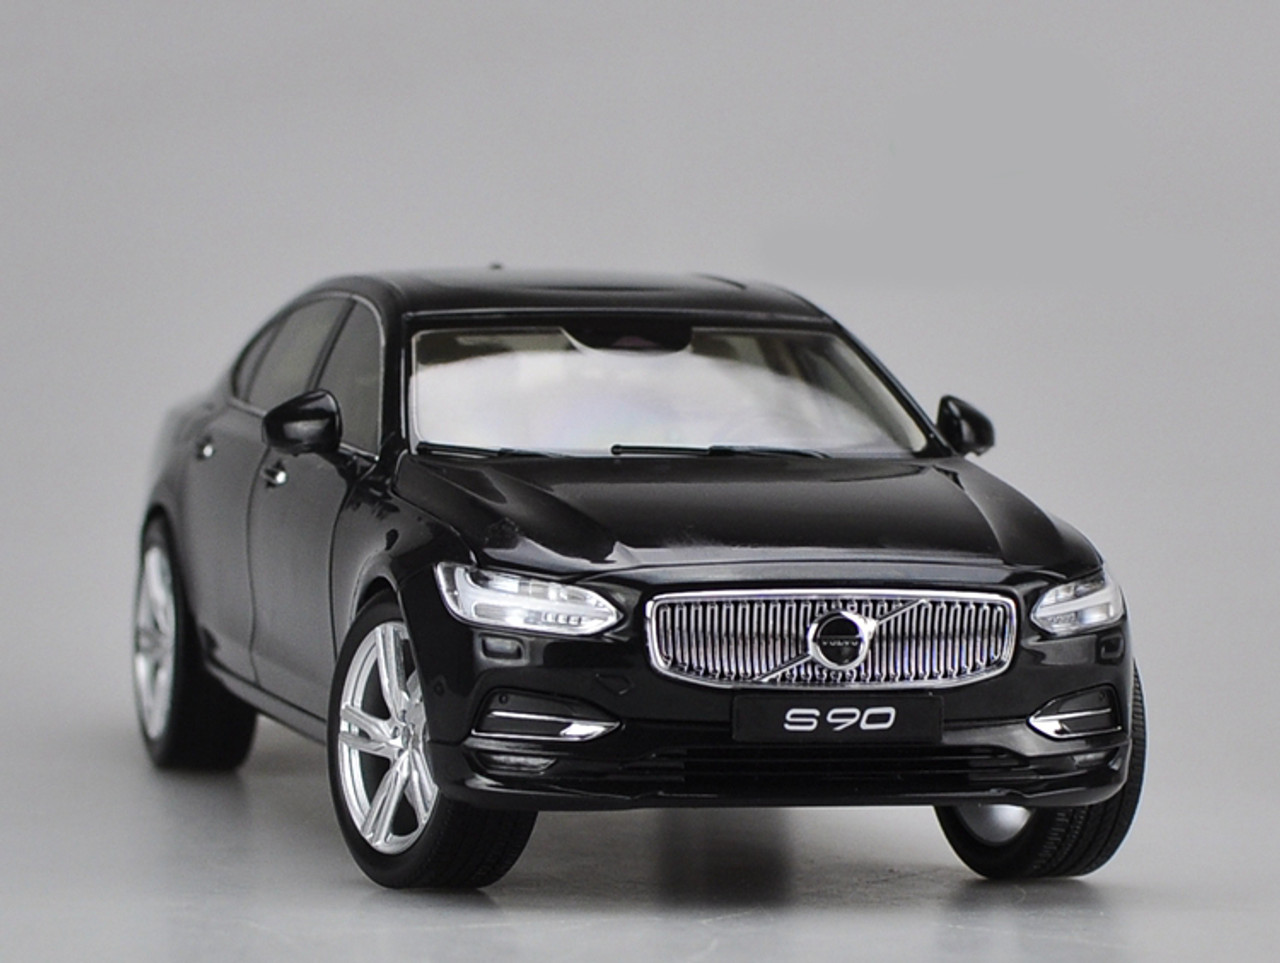 1/18 Dealer Edition Volvo S90 (Black) Diecast Car Model